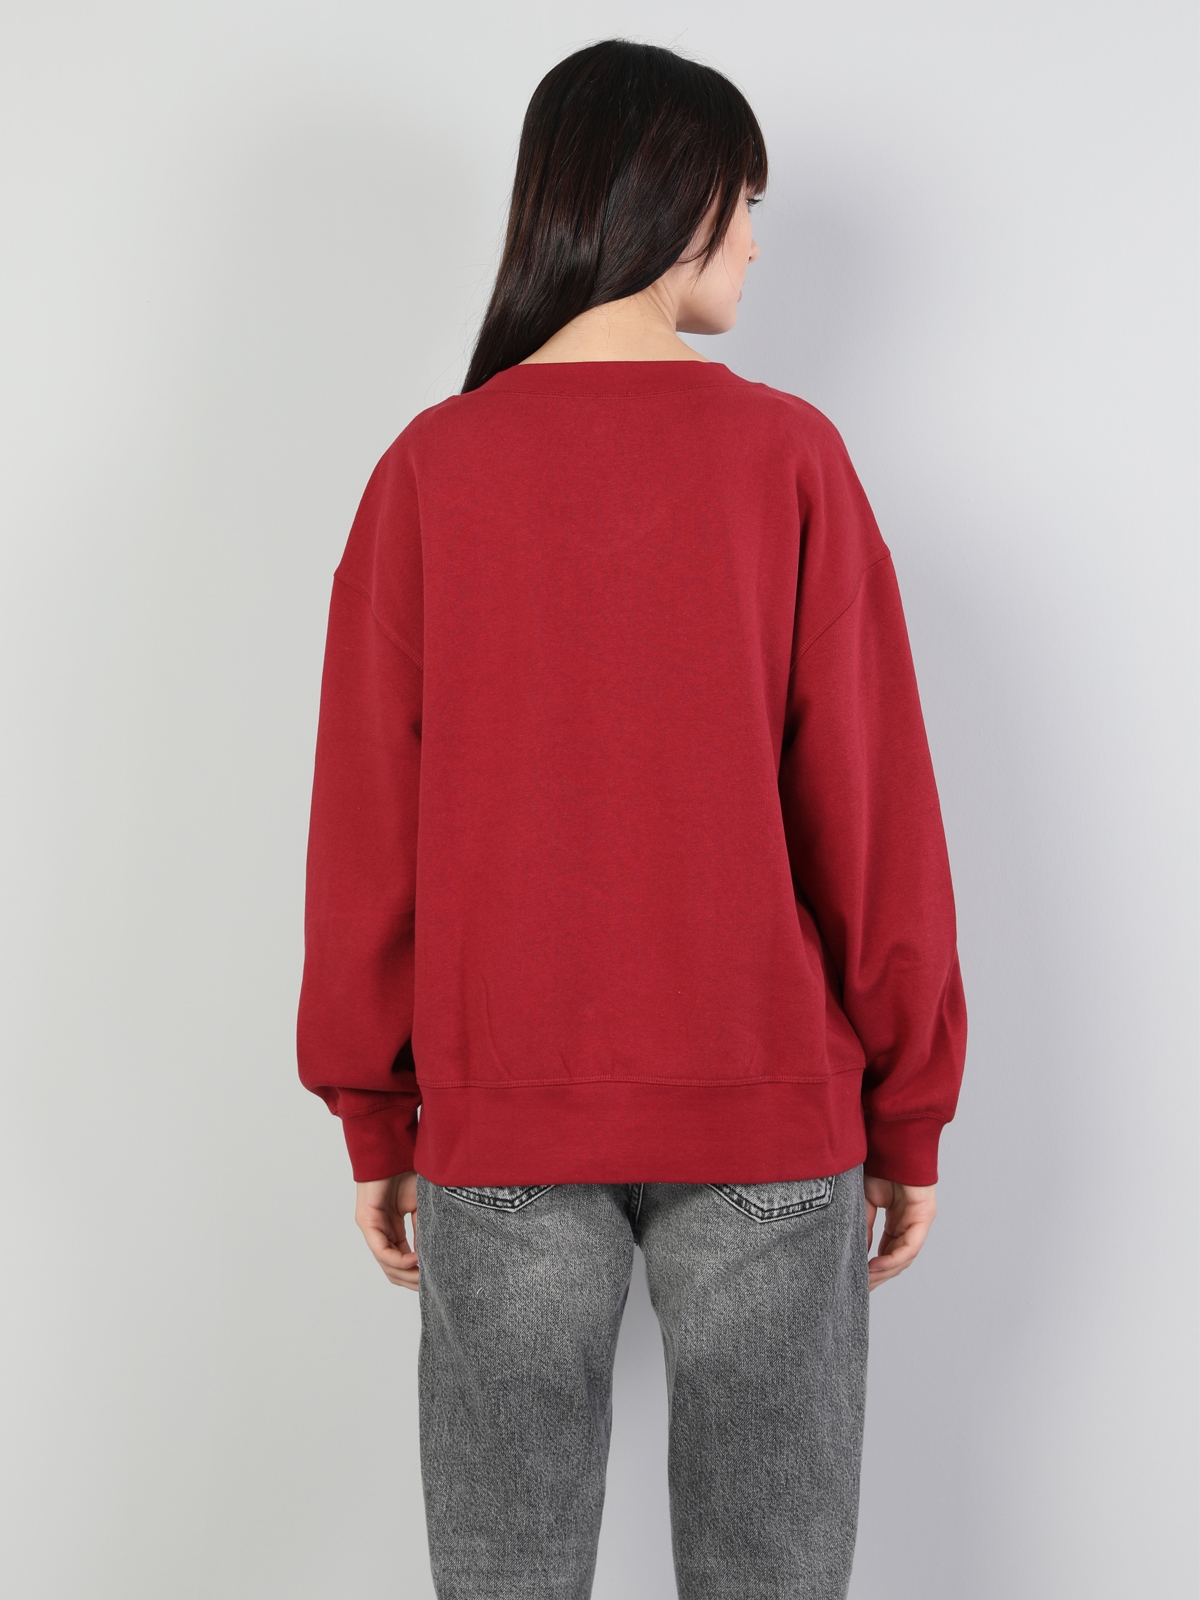  Comfort Fit  Kadın Bordo Sweatshirt